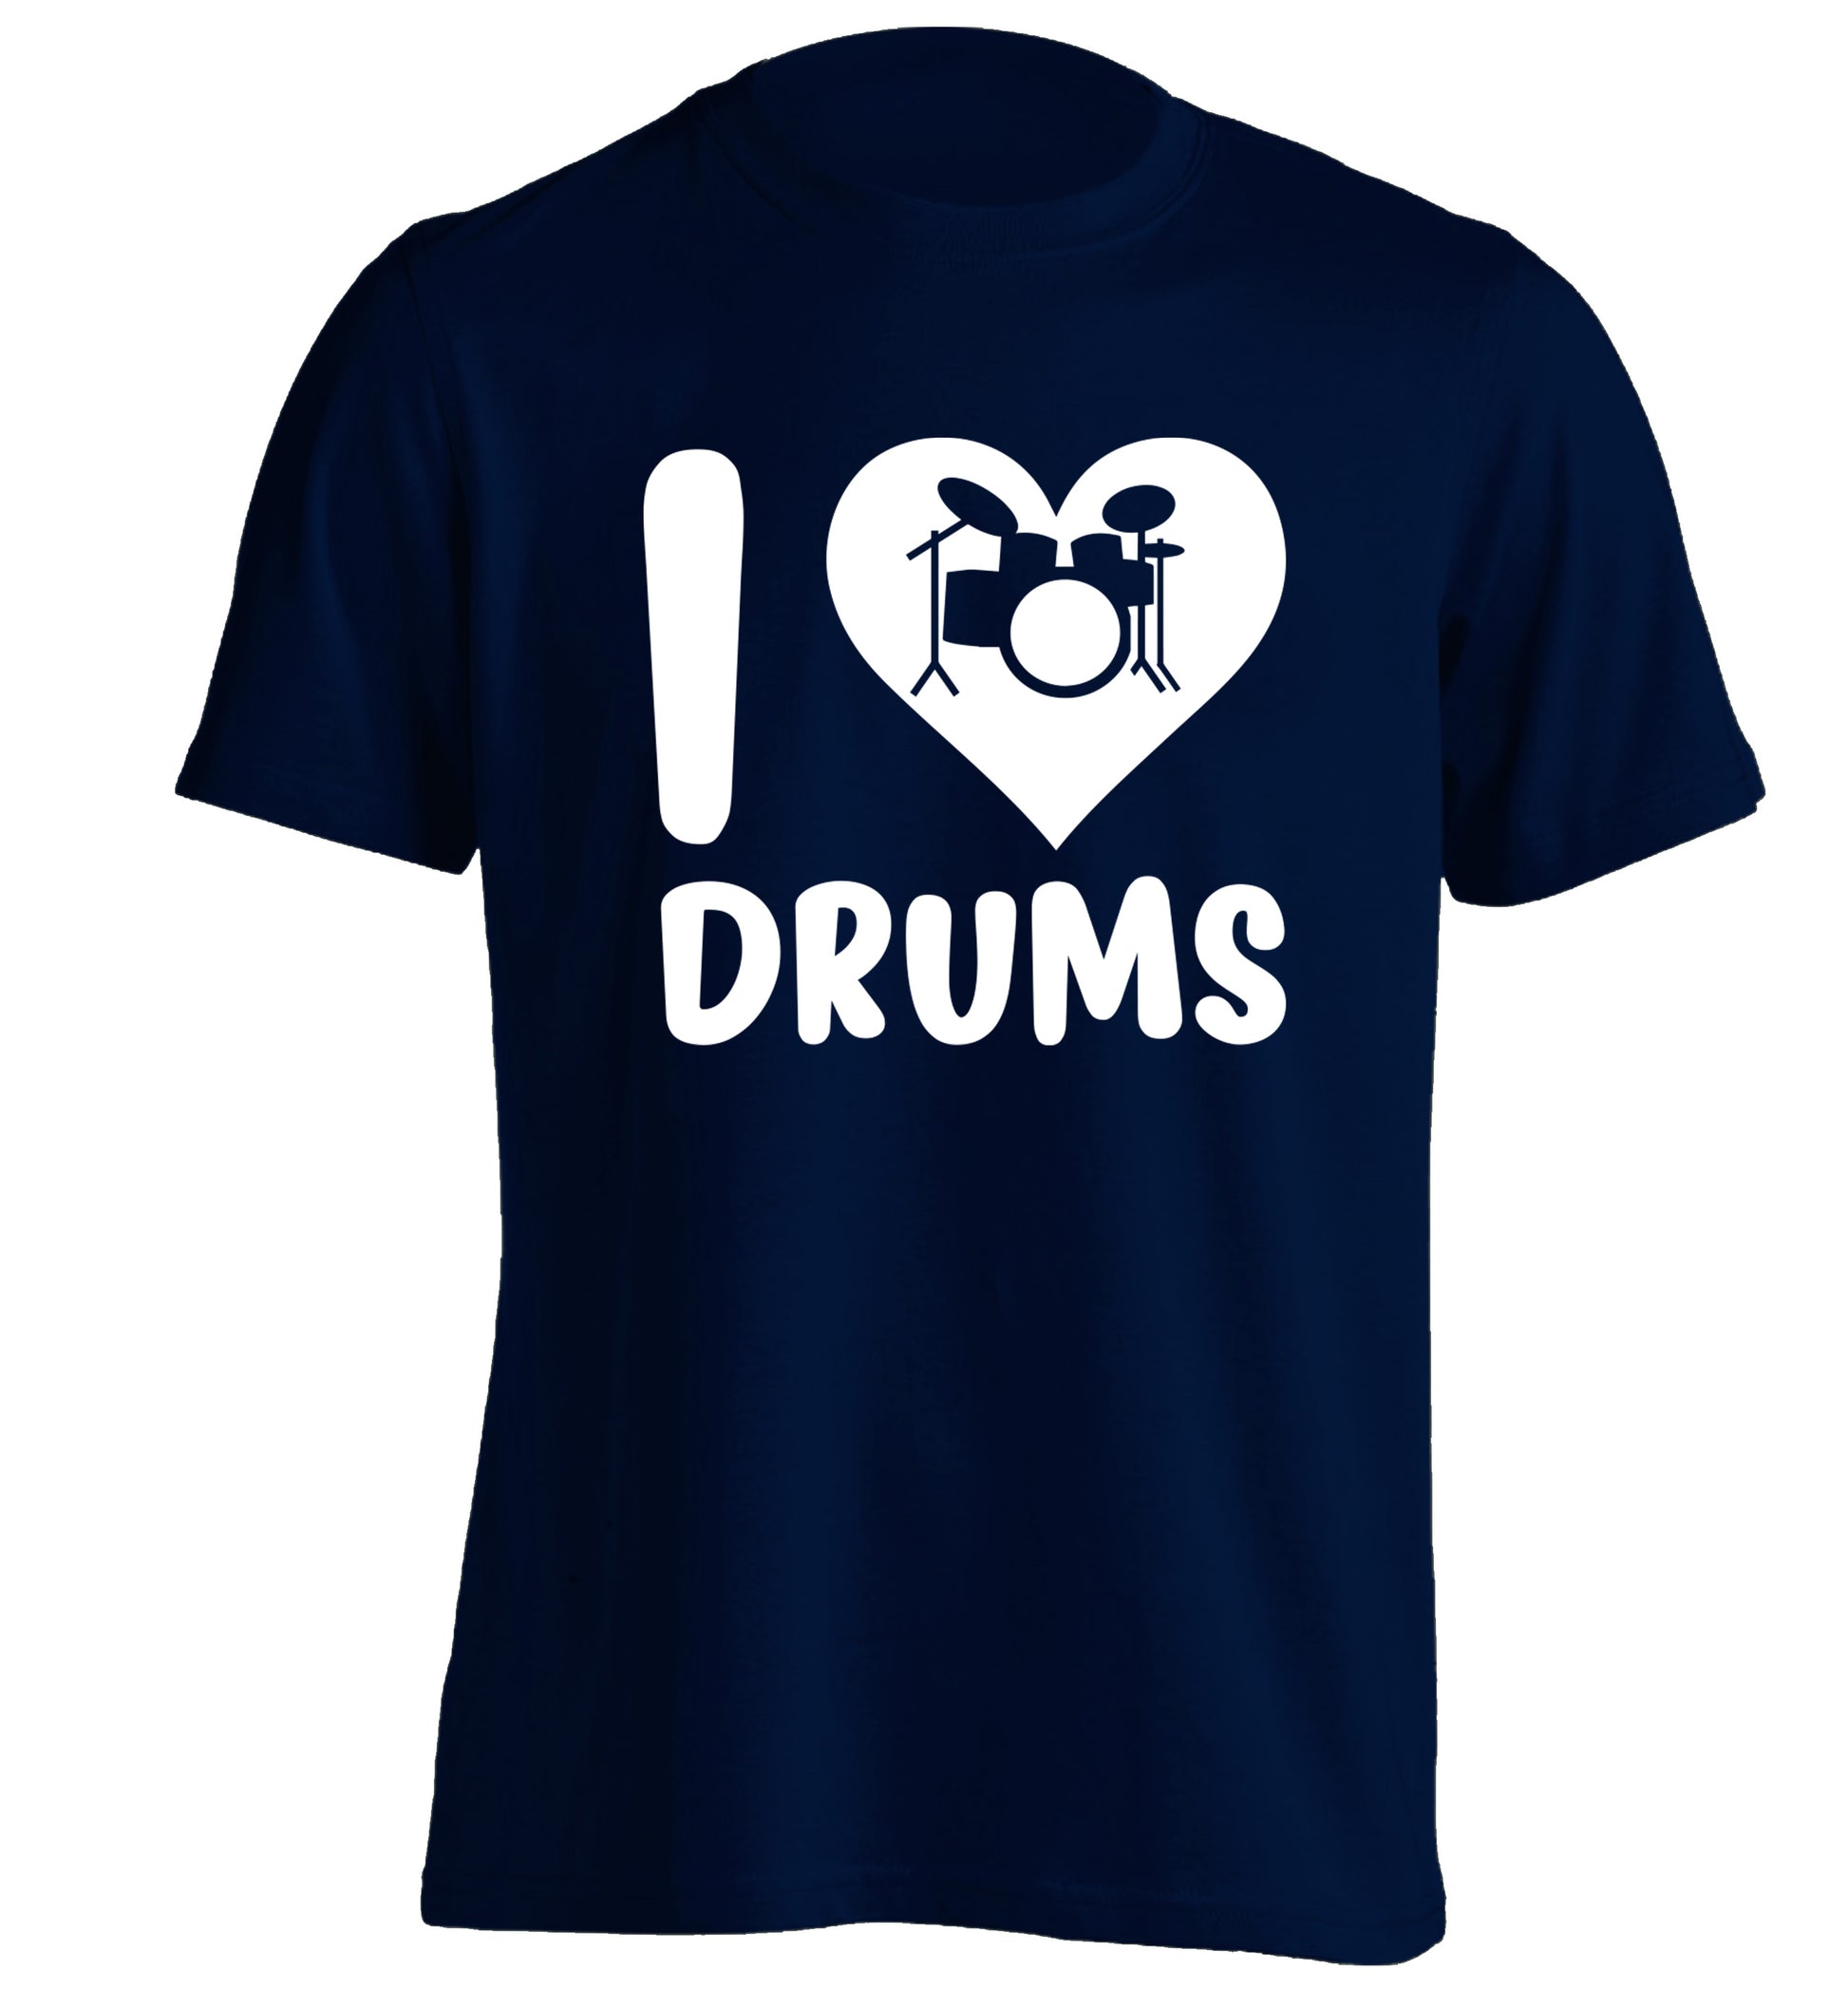 I love drums adults unisex navy Tshirt 2XL